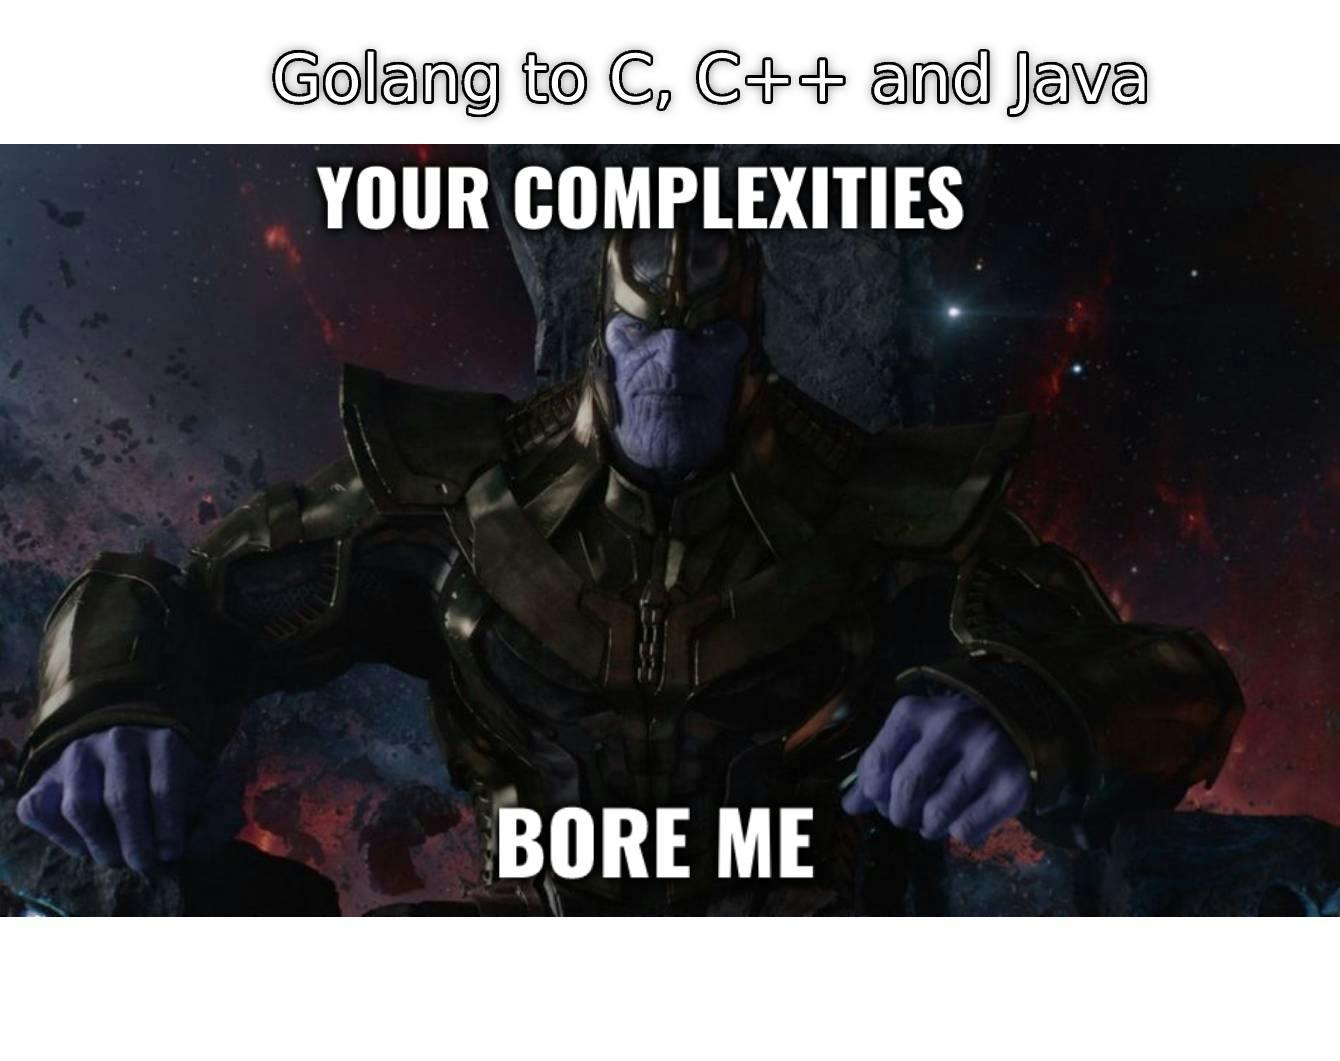 Thanos meme: Your complexities bore me